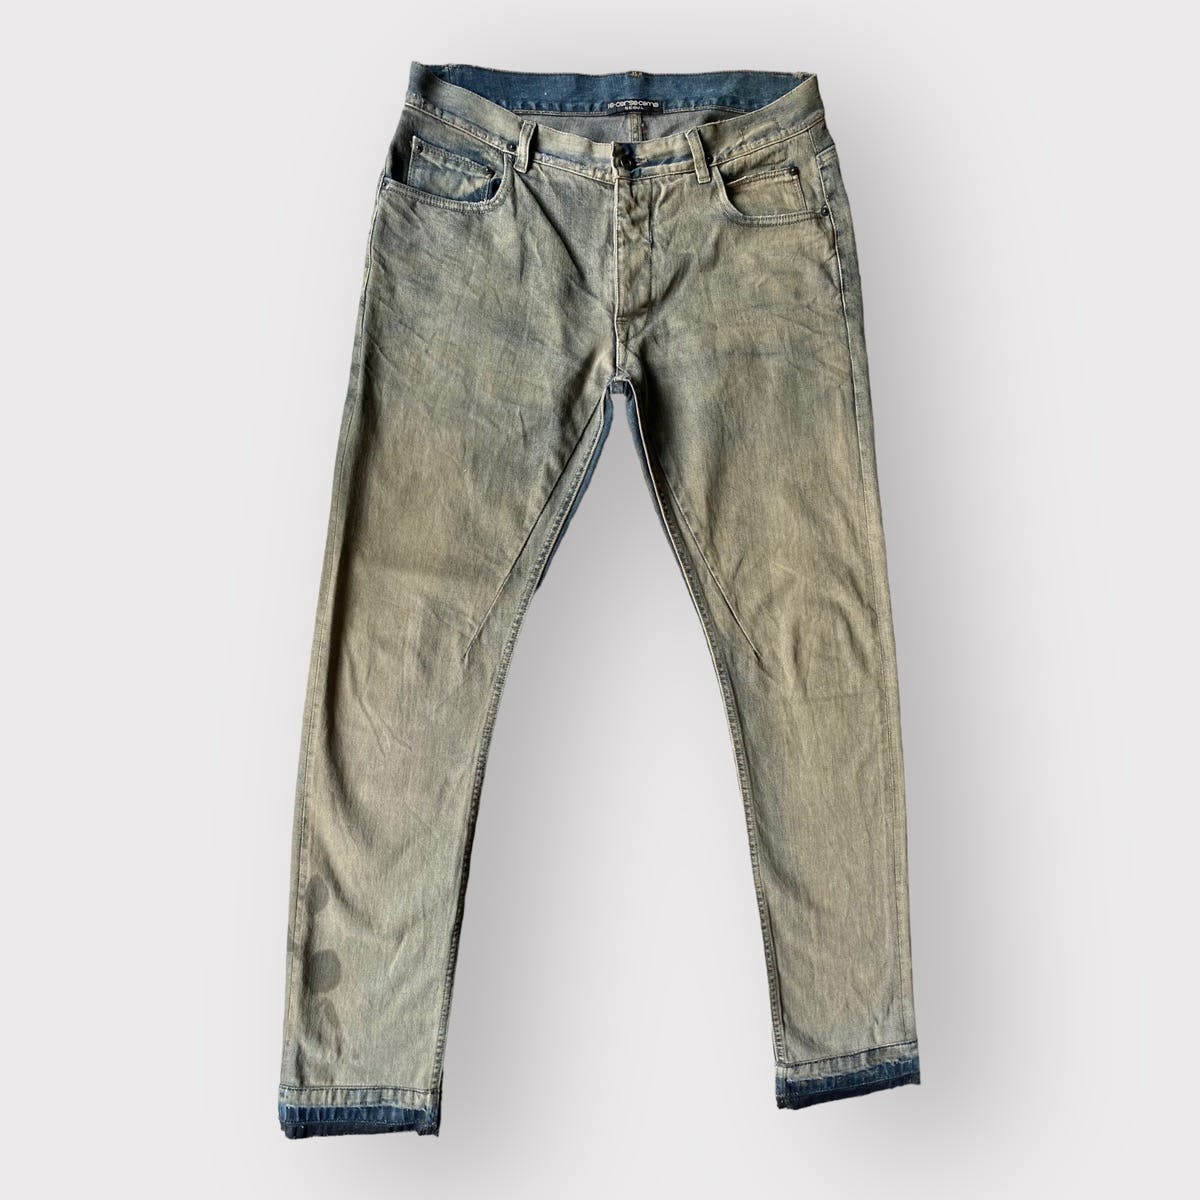 Drkshdw Detroit Mud Dirt Jeans - 1